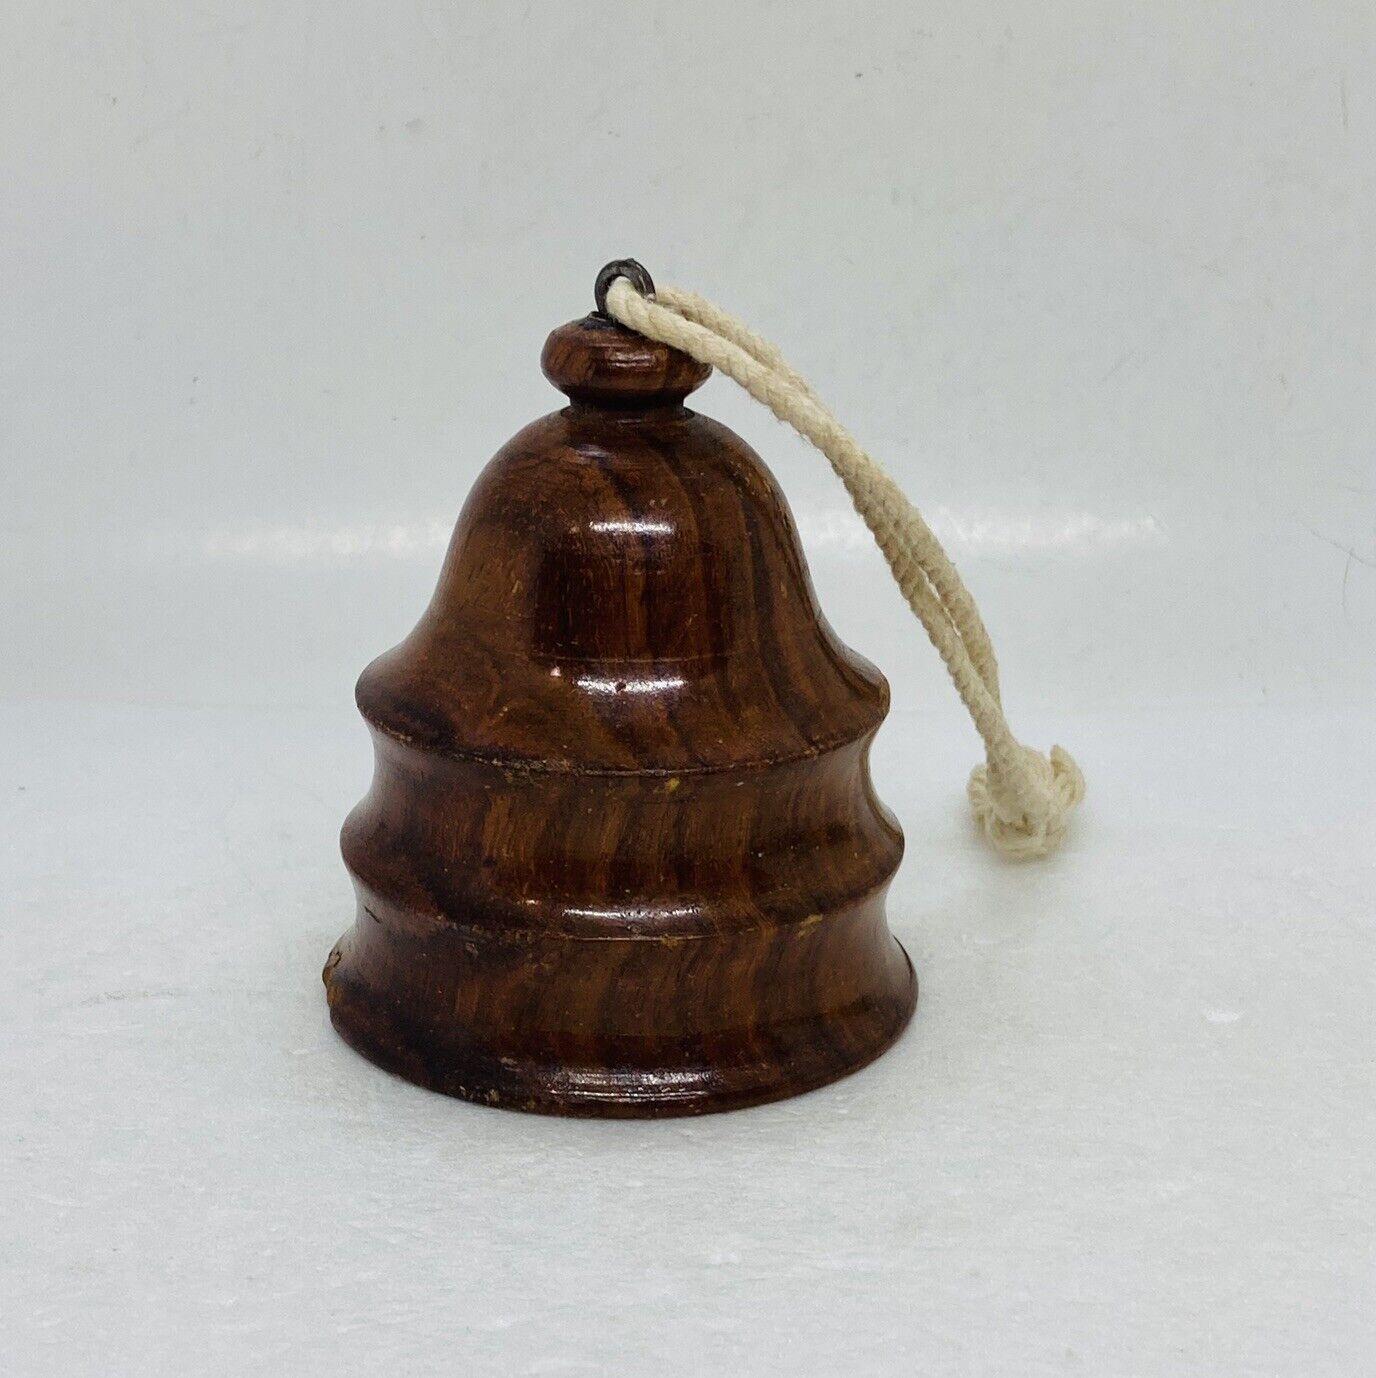 Vintage 1970s Carved Wooden Hanging Bell Ornate With Tree Nut Knocker 3.25” C3